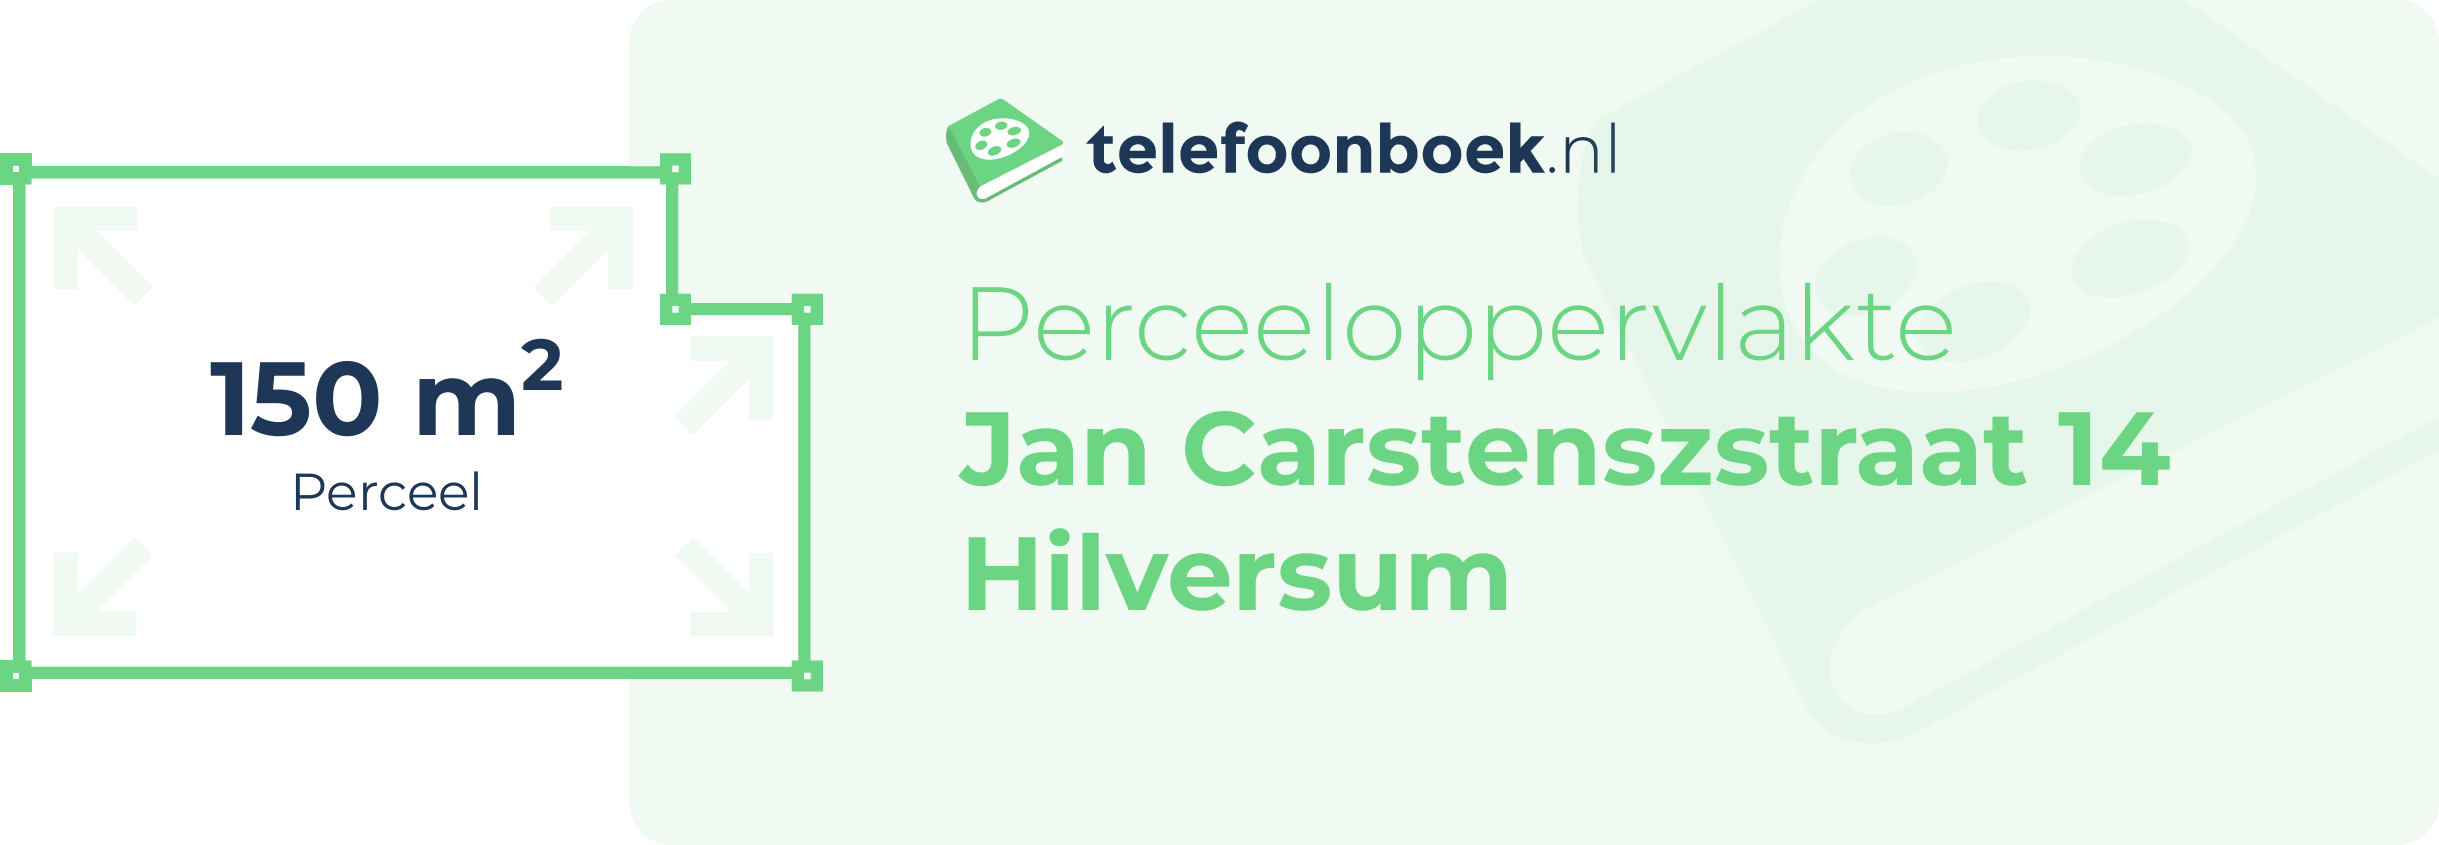 Perceeloppervlakte Jan Carstenszstraat 14 Hilversum